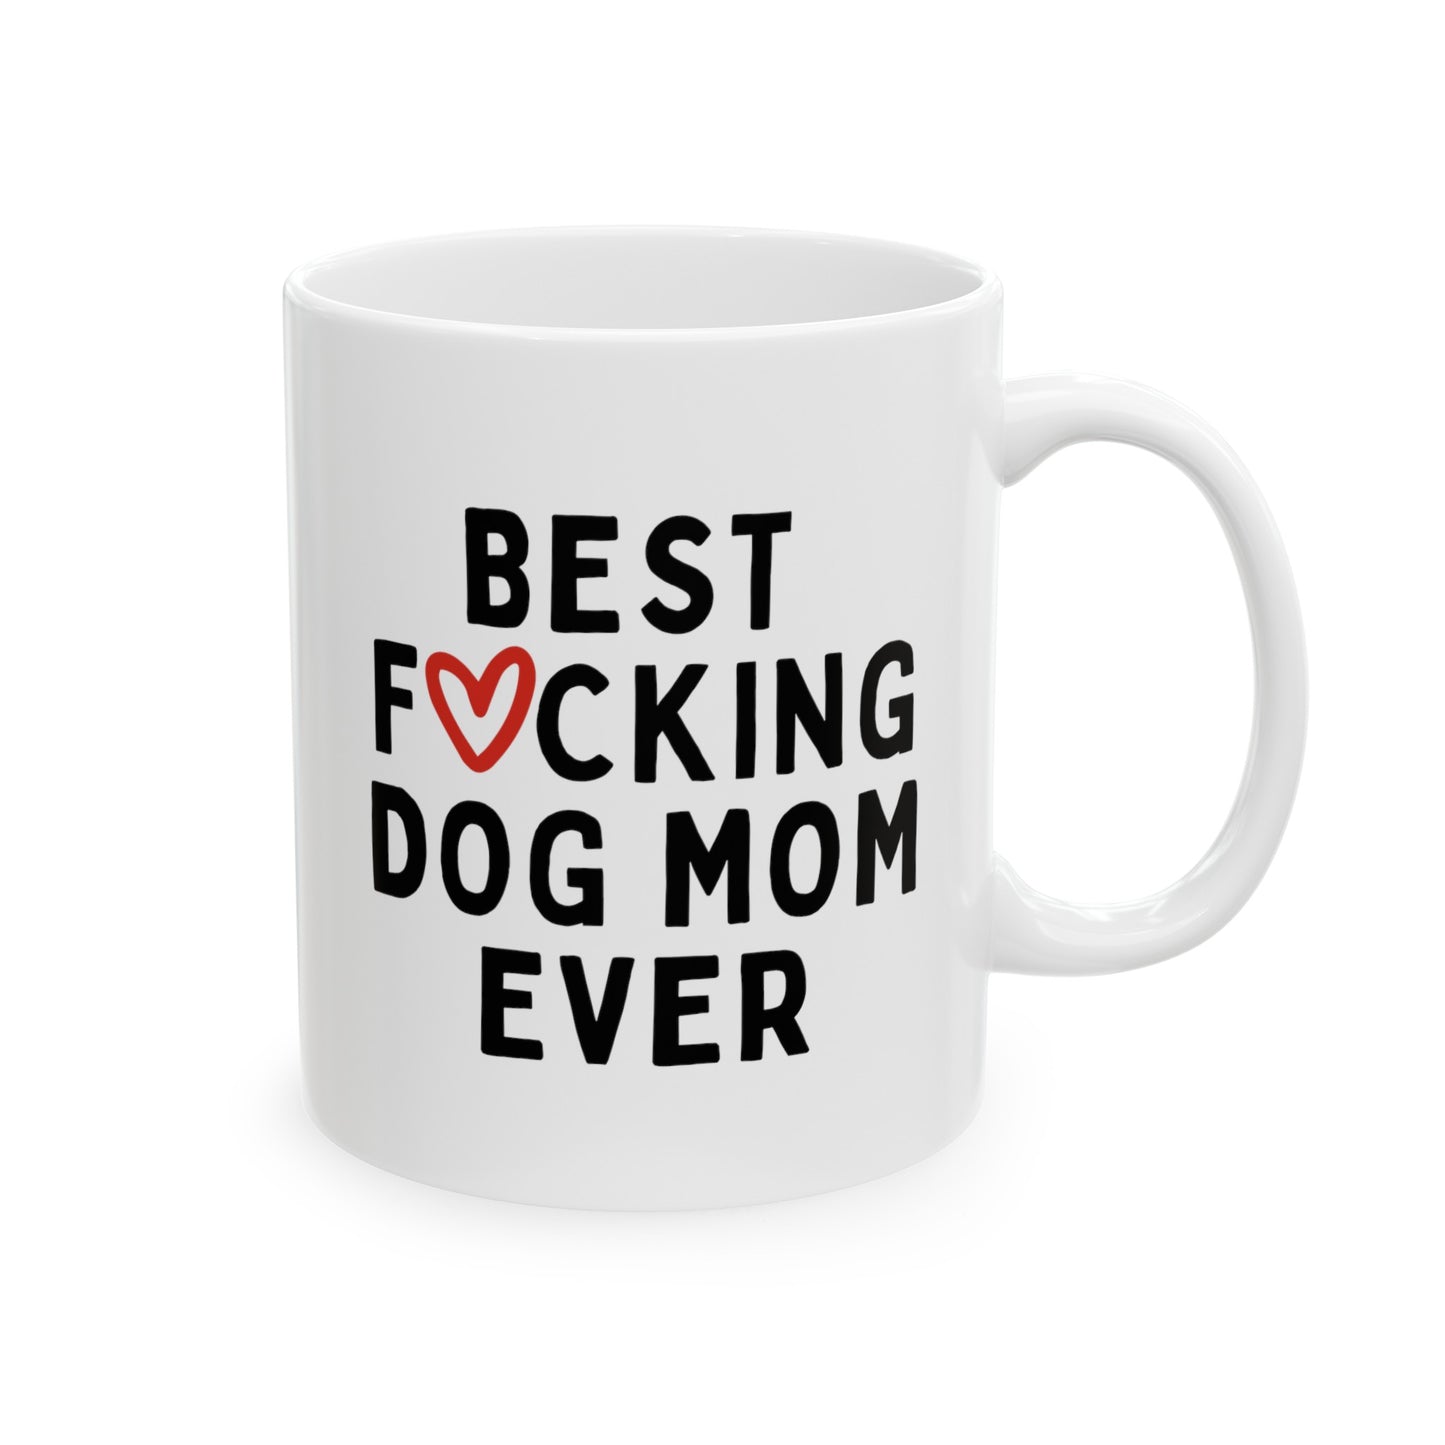 Best Fucking Dog Mom Ever 11oz white funny large coffee mug gift for furmom pet lover owner cuss word heart waveywares wavey wares wavywares wavy wares